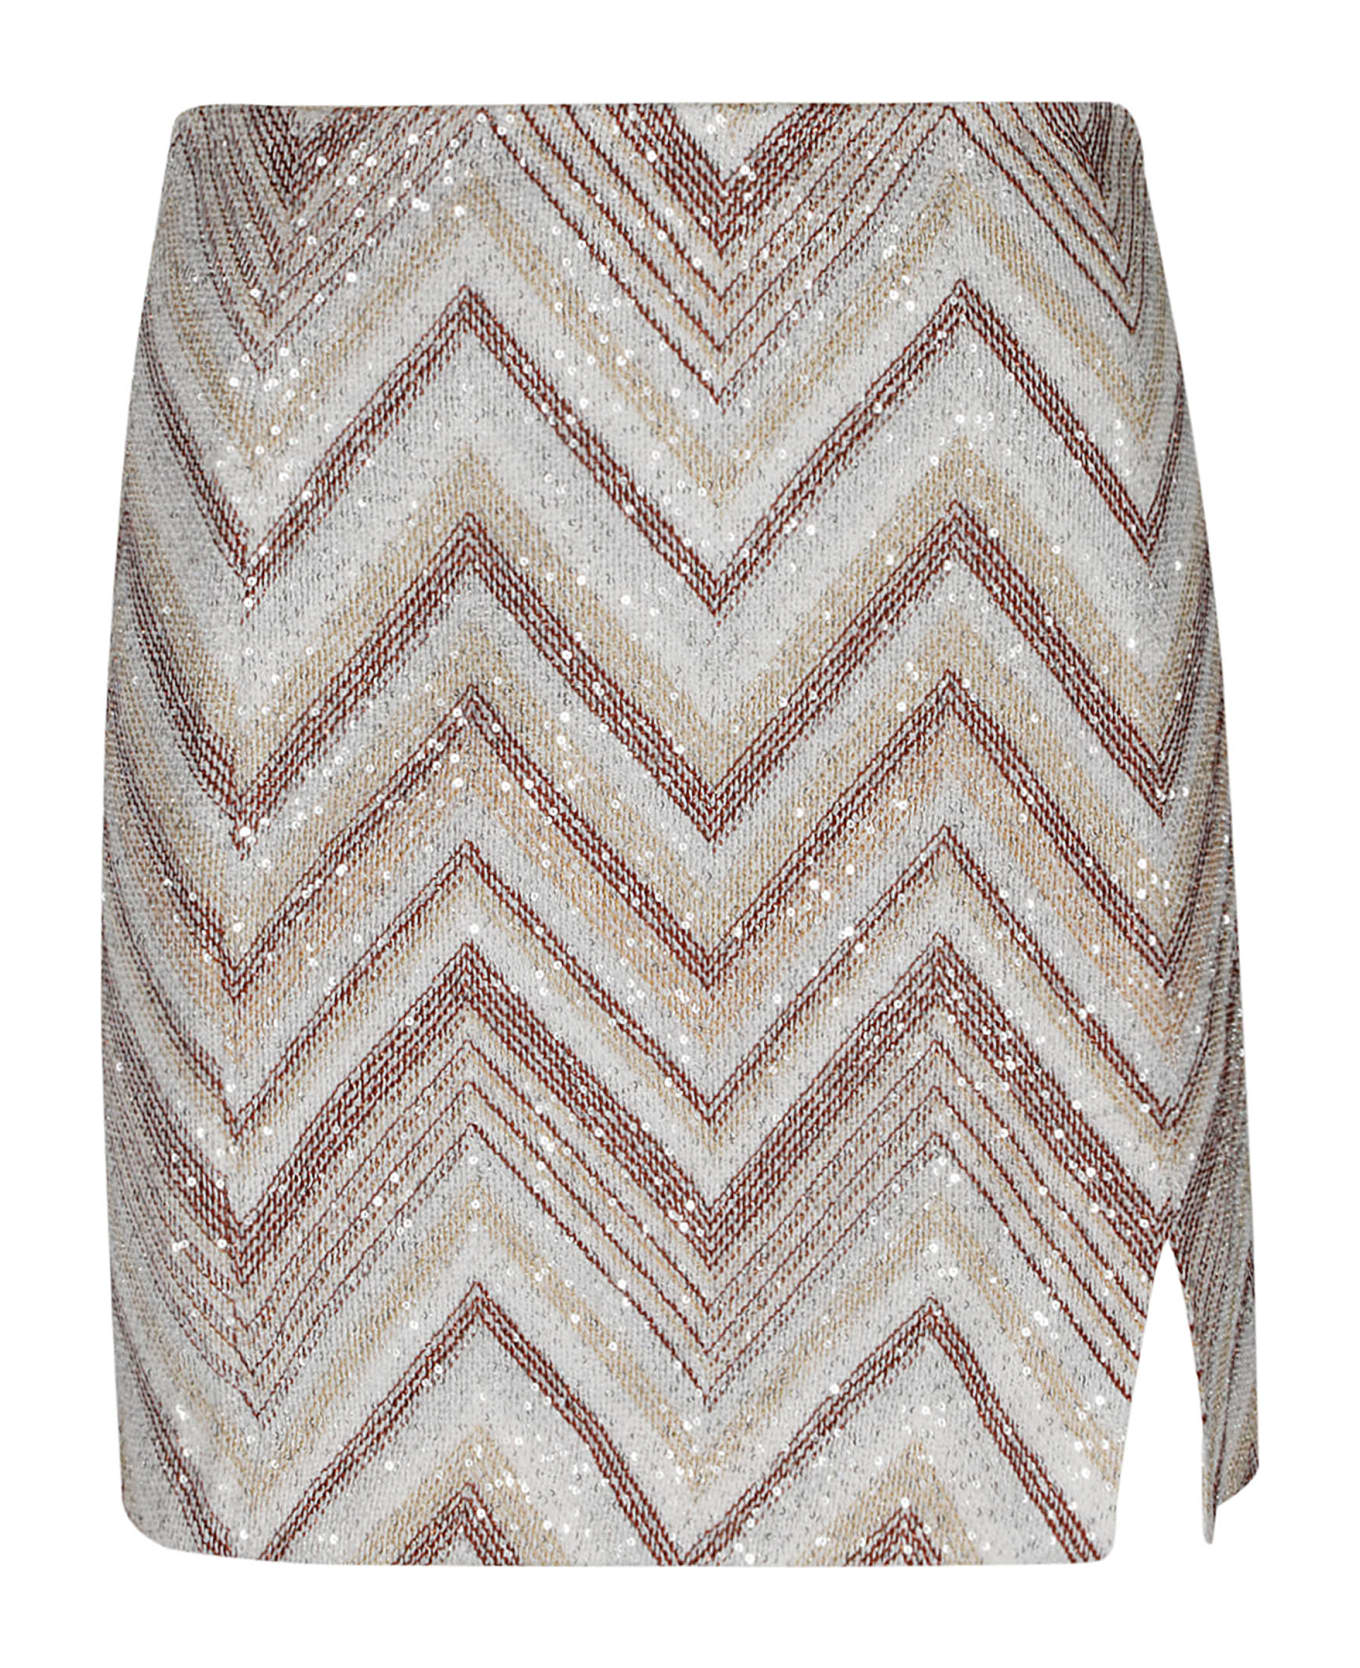 Missoni Zig-zag Stripe Pattern Embellished Short Skirt - Multicolor